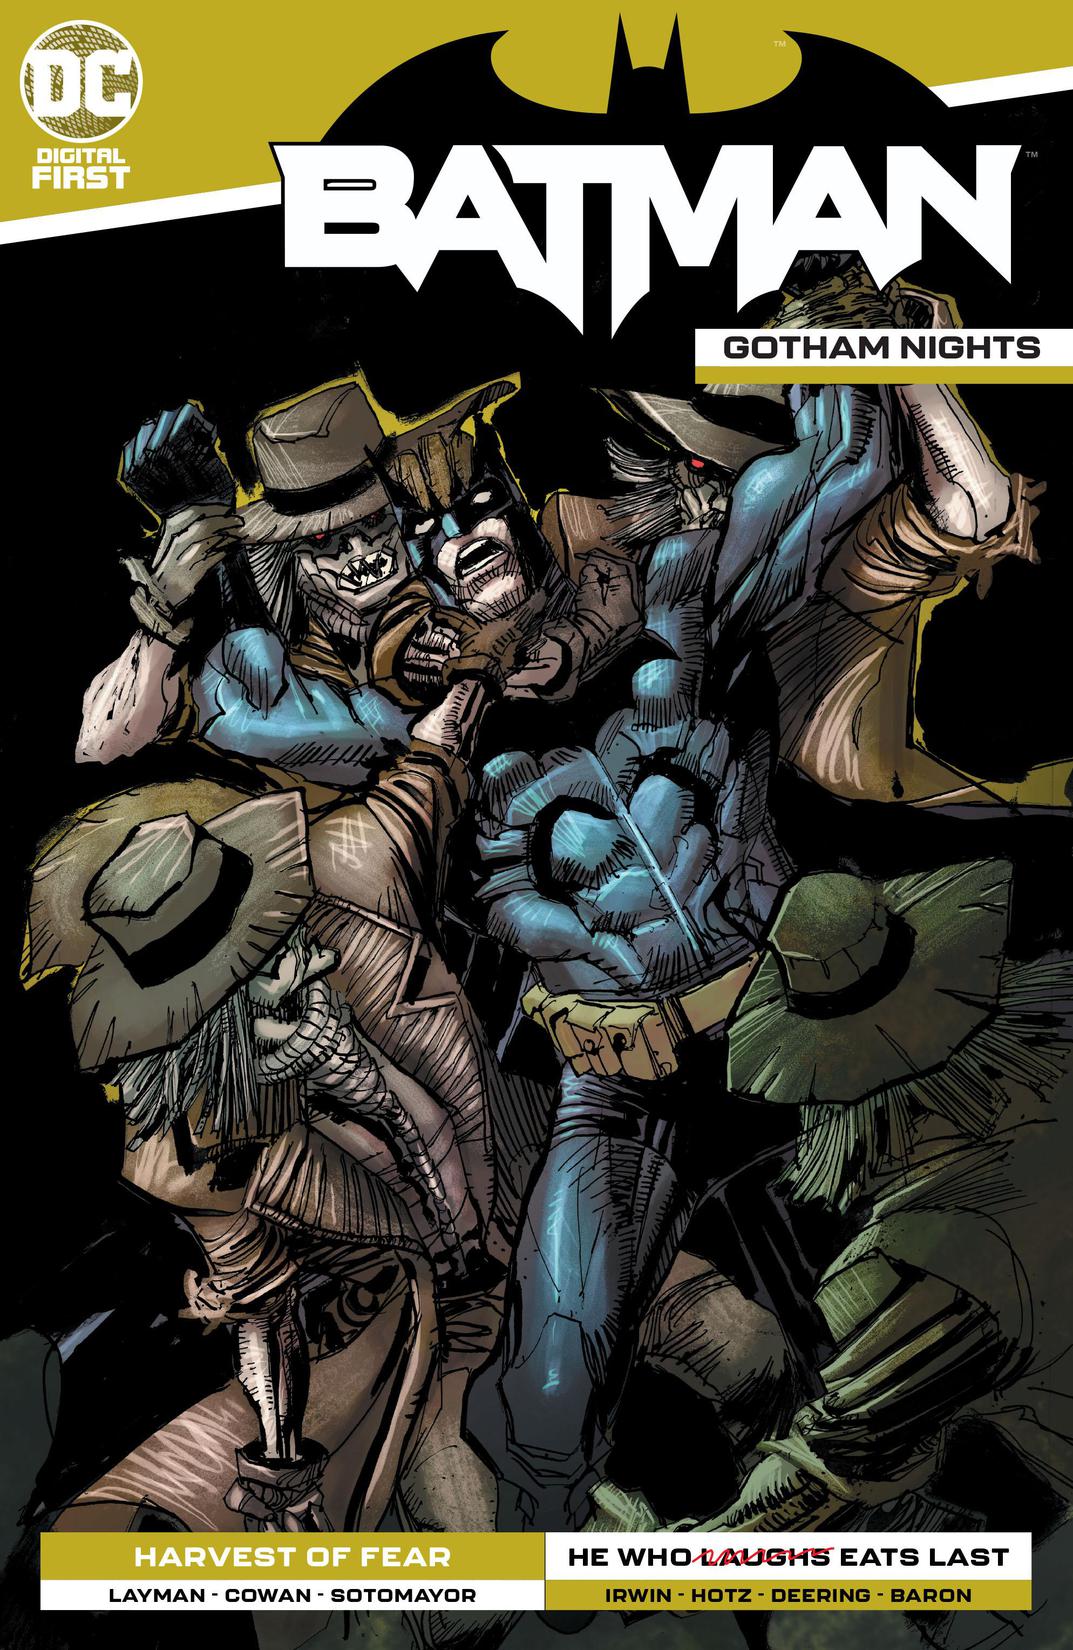 Batman: Gotham Nights #17 preview images